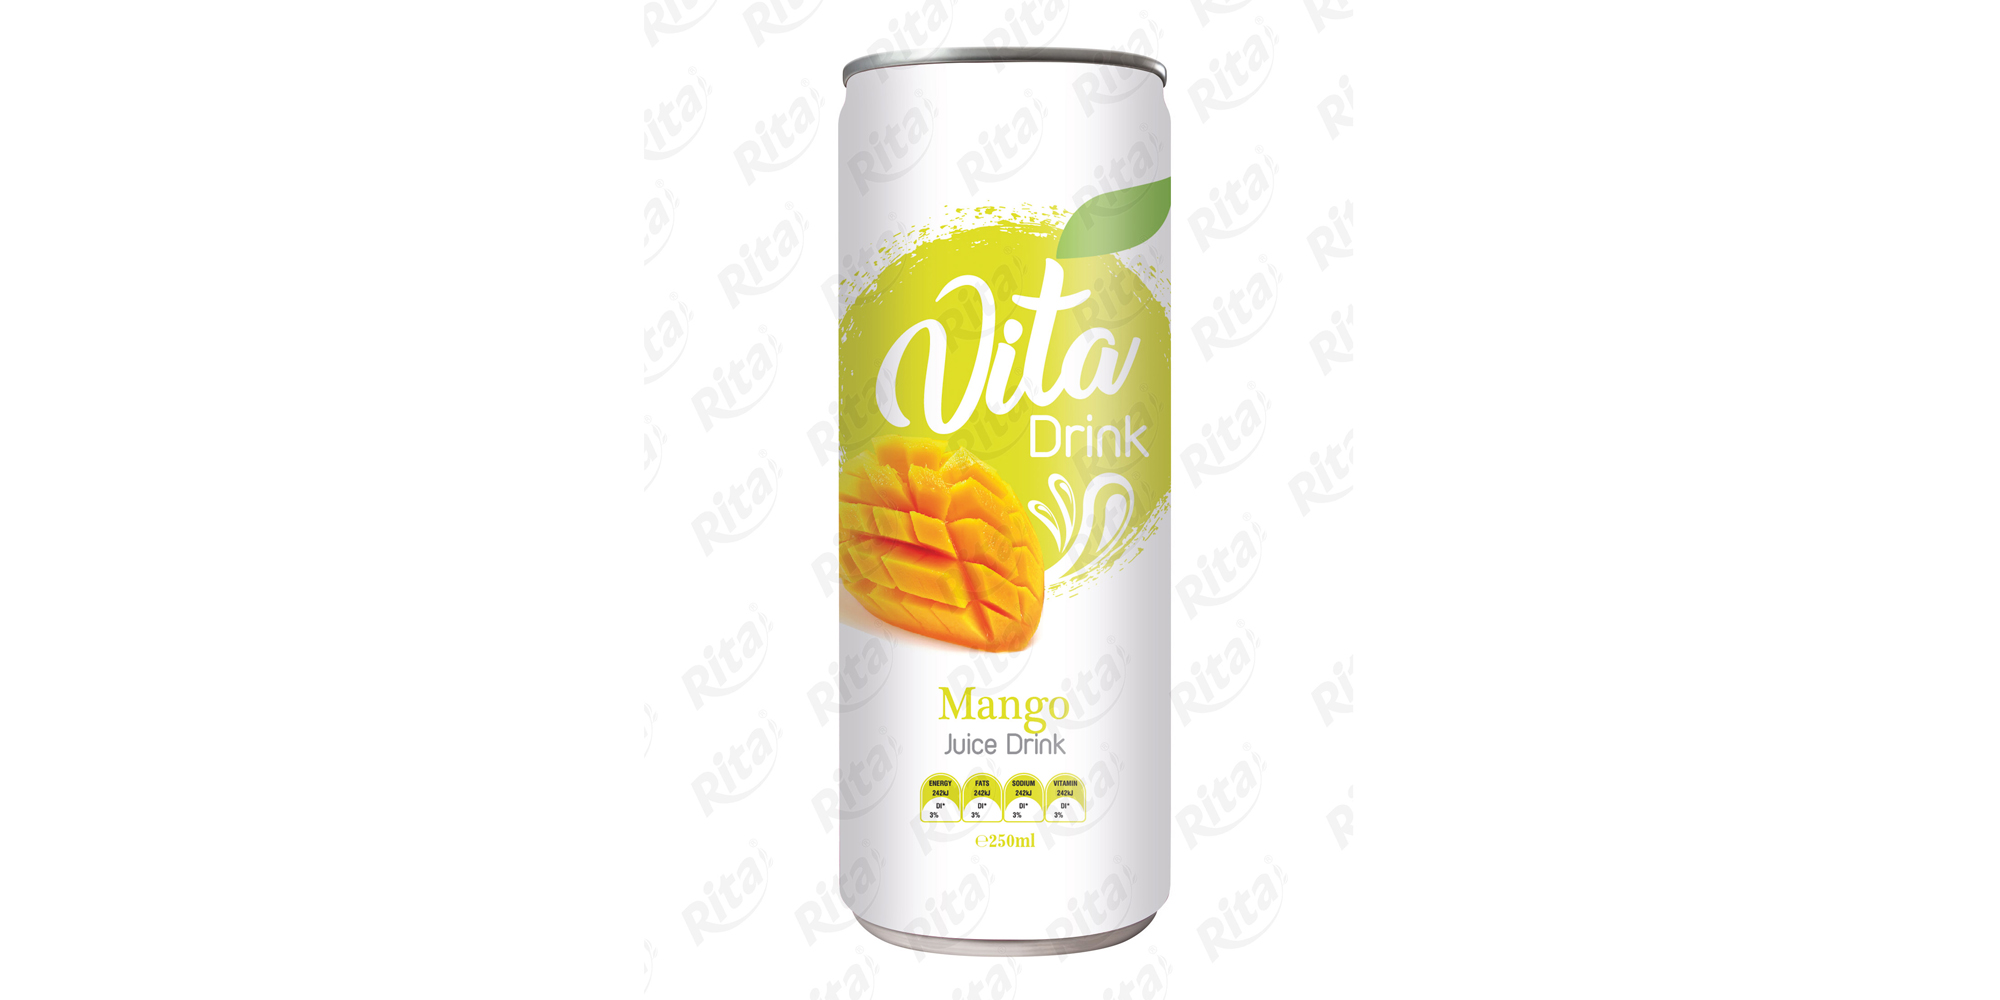 Mango juice drink 250ml from RITA India